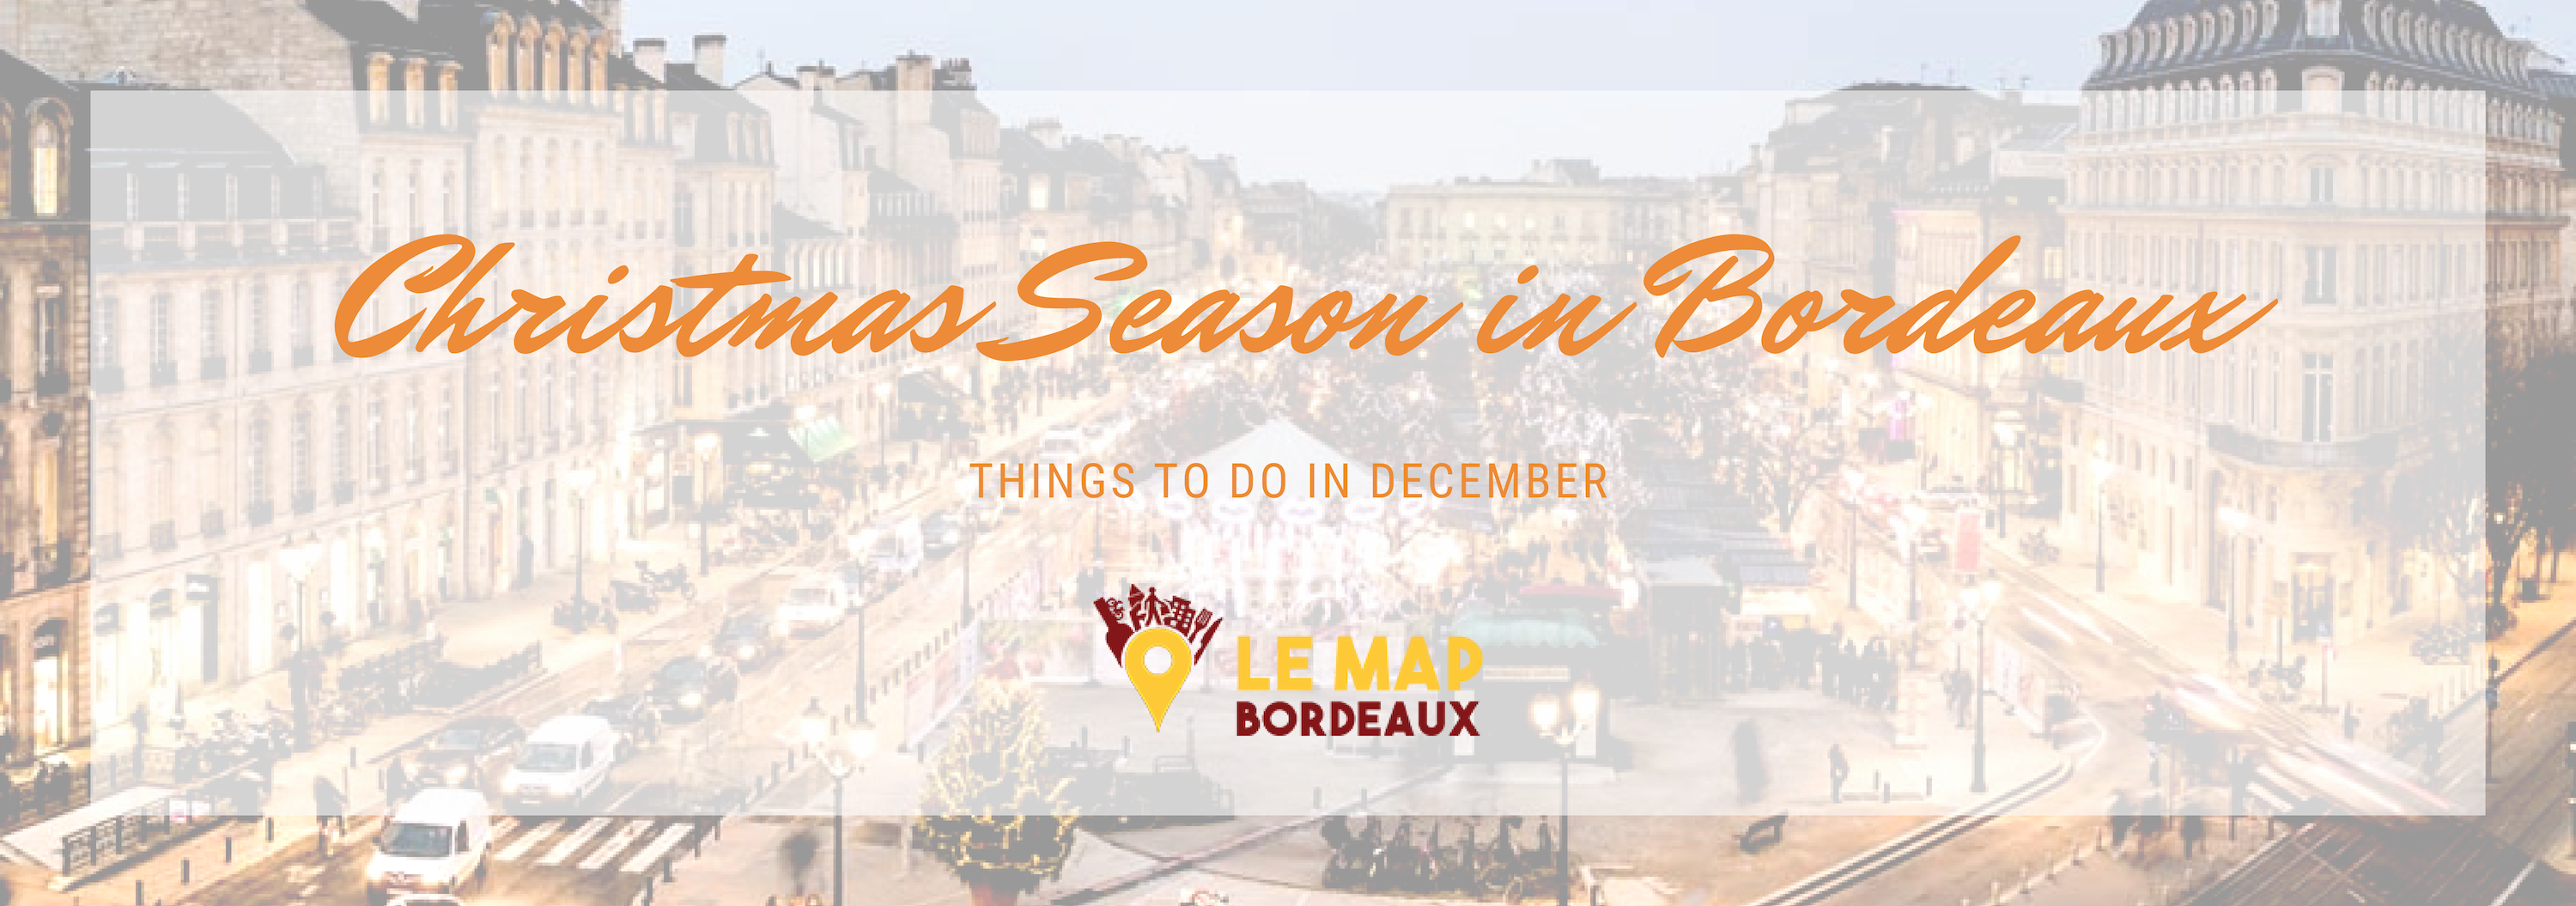 Christmas Season in Bordeaux